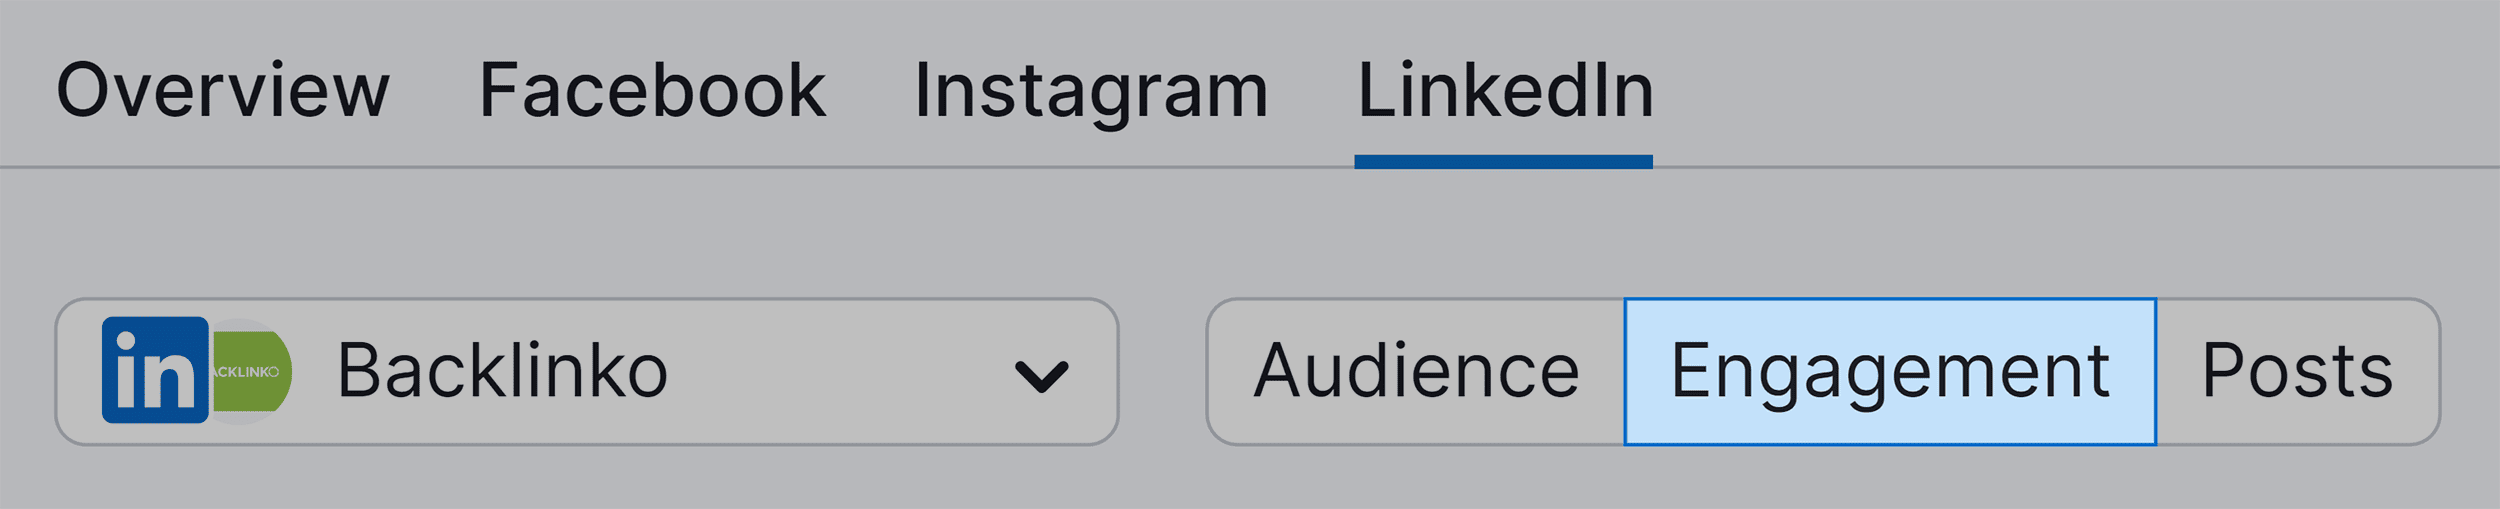 Social Analytics – LinkedIn – Engagement